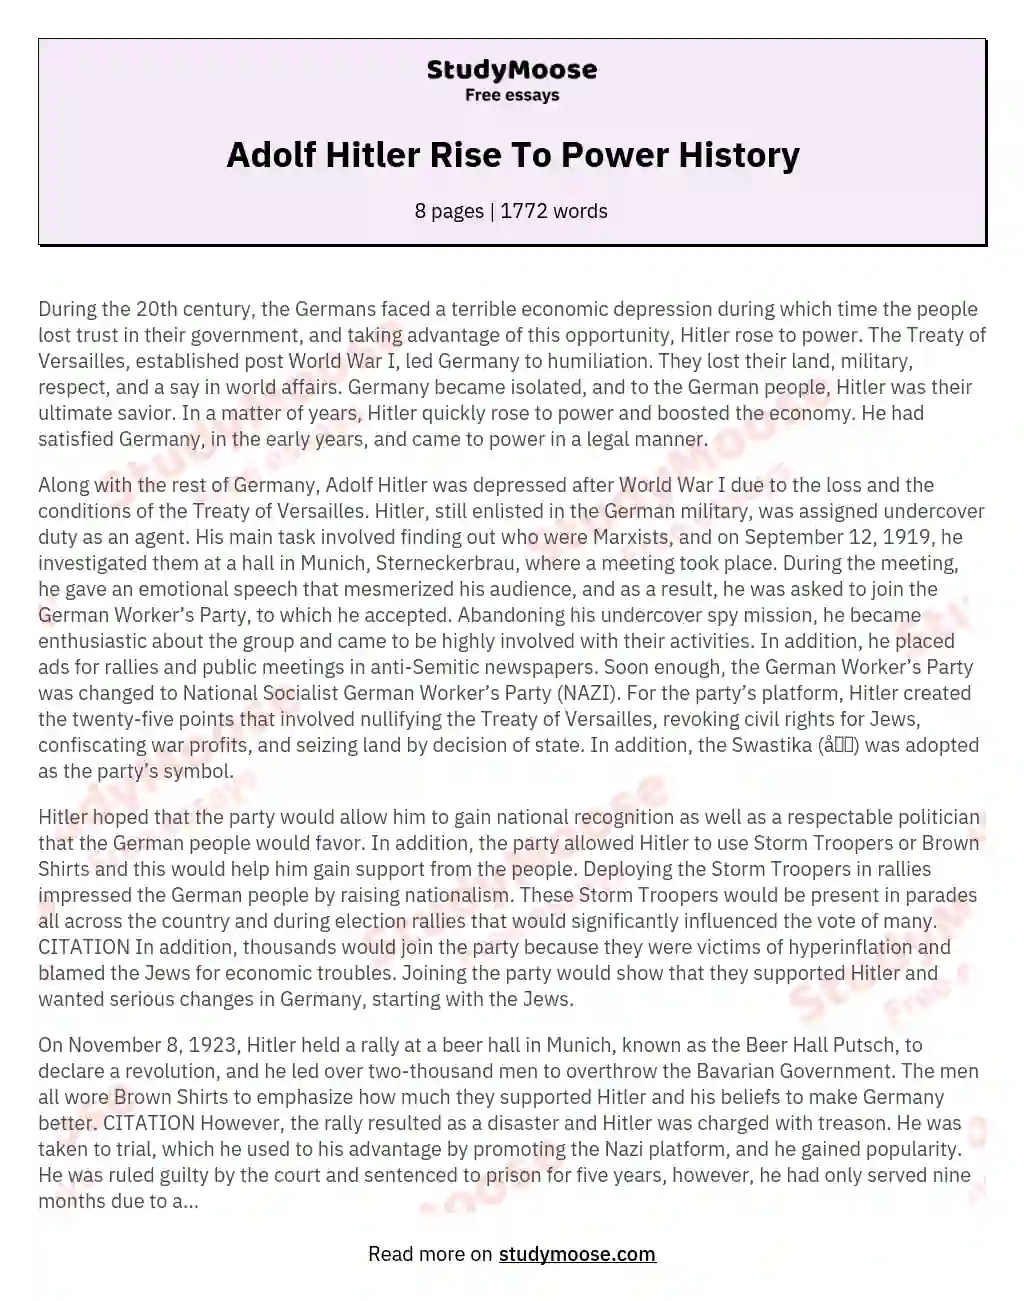 Adolf Hitler Rise To Power History essay